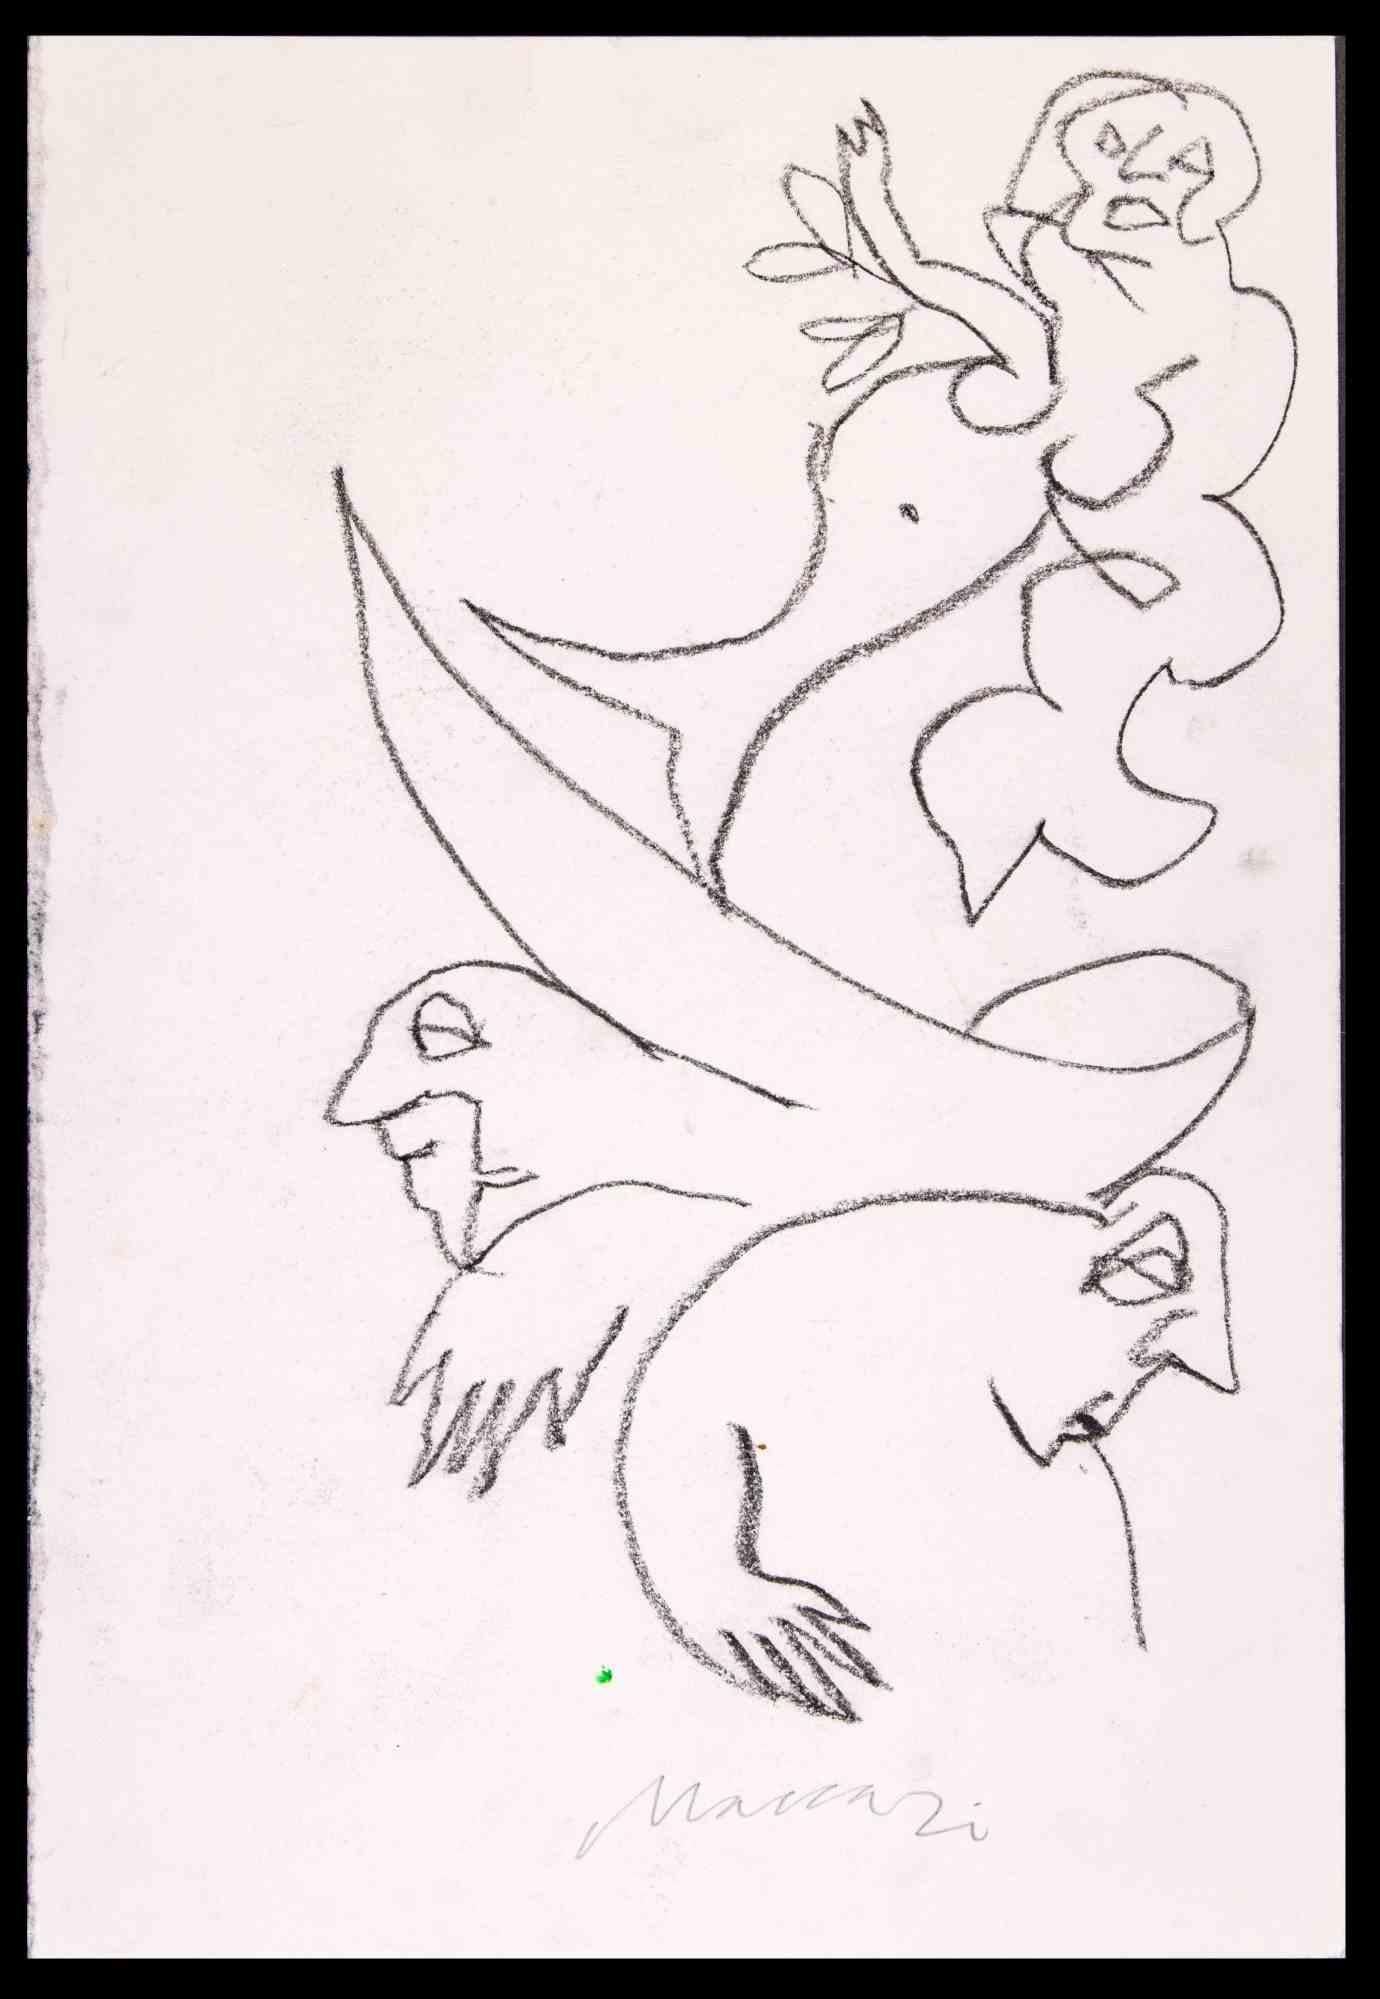 Mermaid - Charcoal Drawing by Mino Maccari - 1980